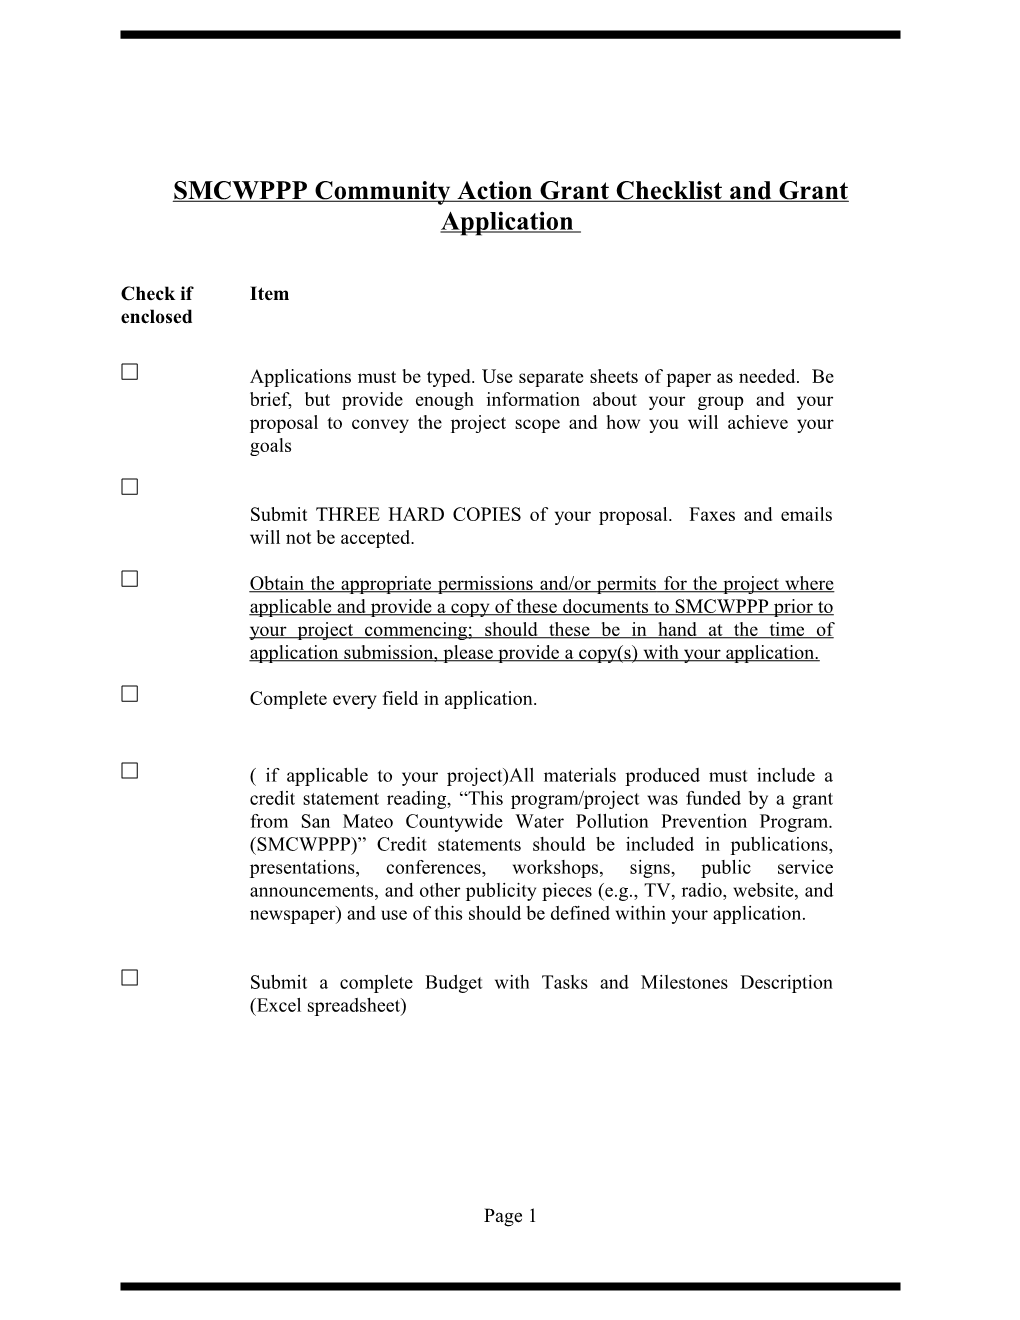 SMCWPPP Community Action Grant Checklist- Grant Application Submission Checklist